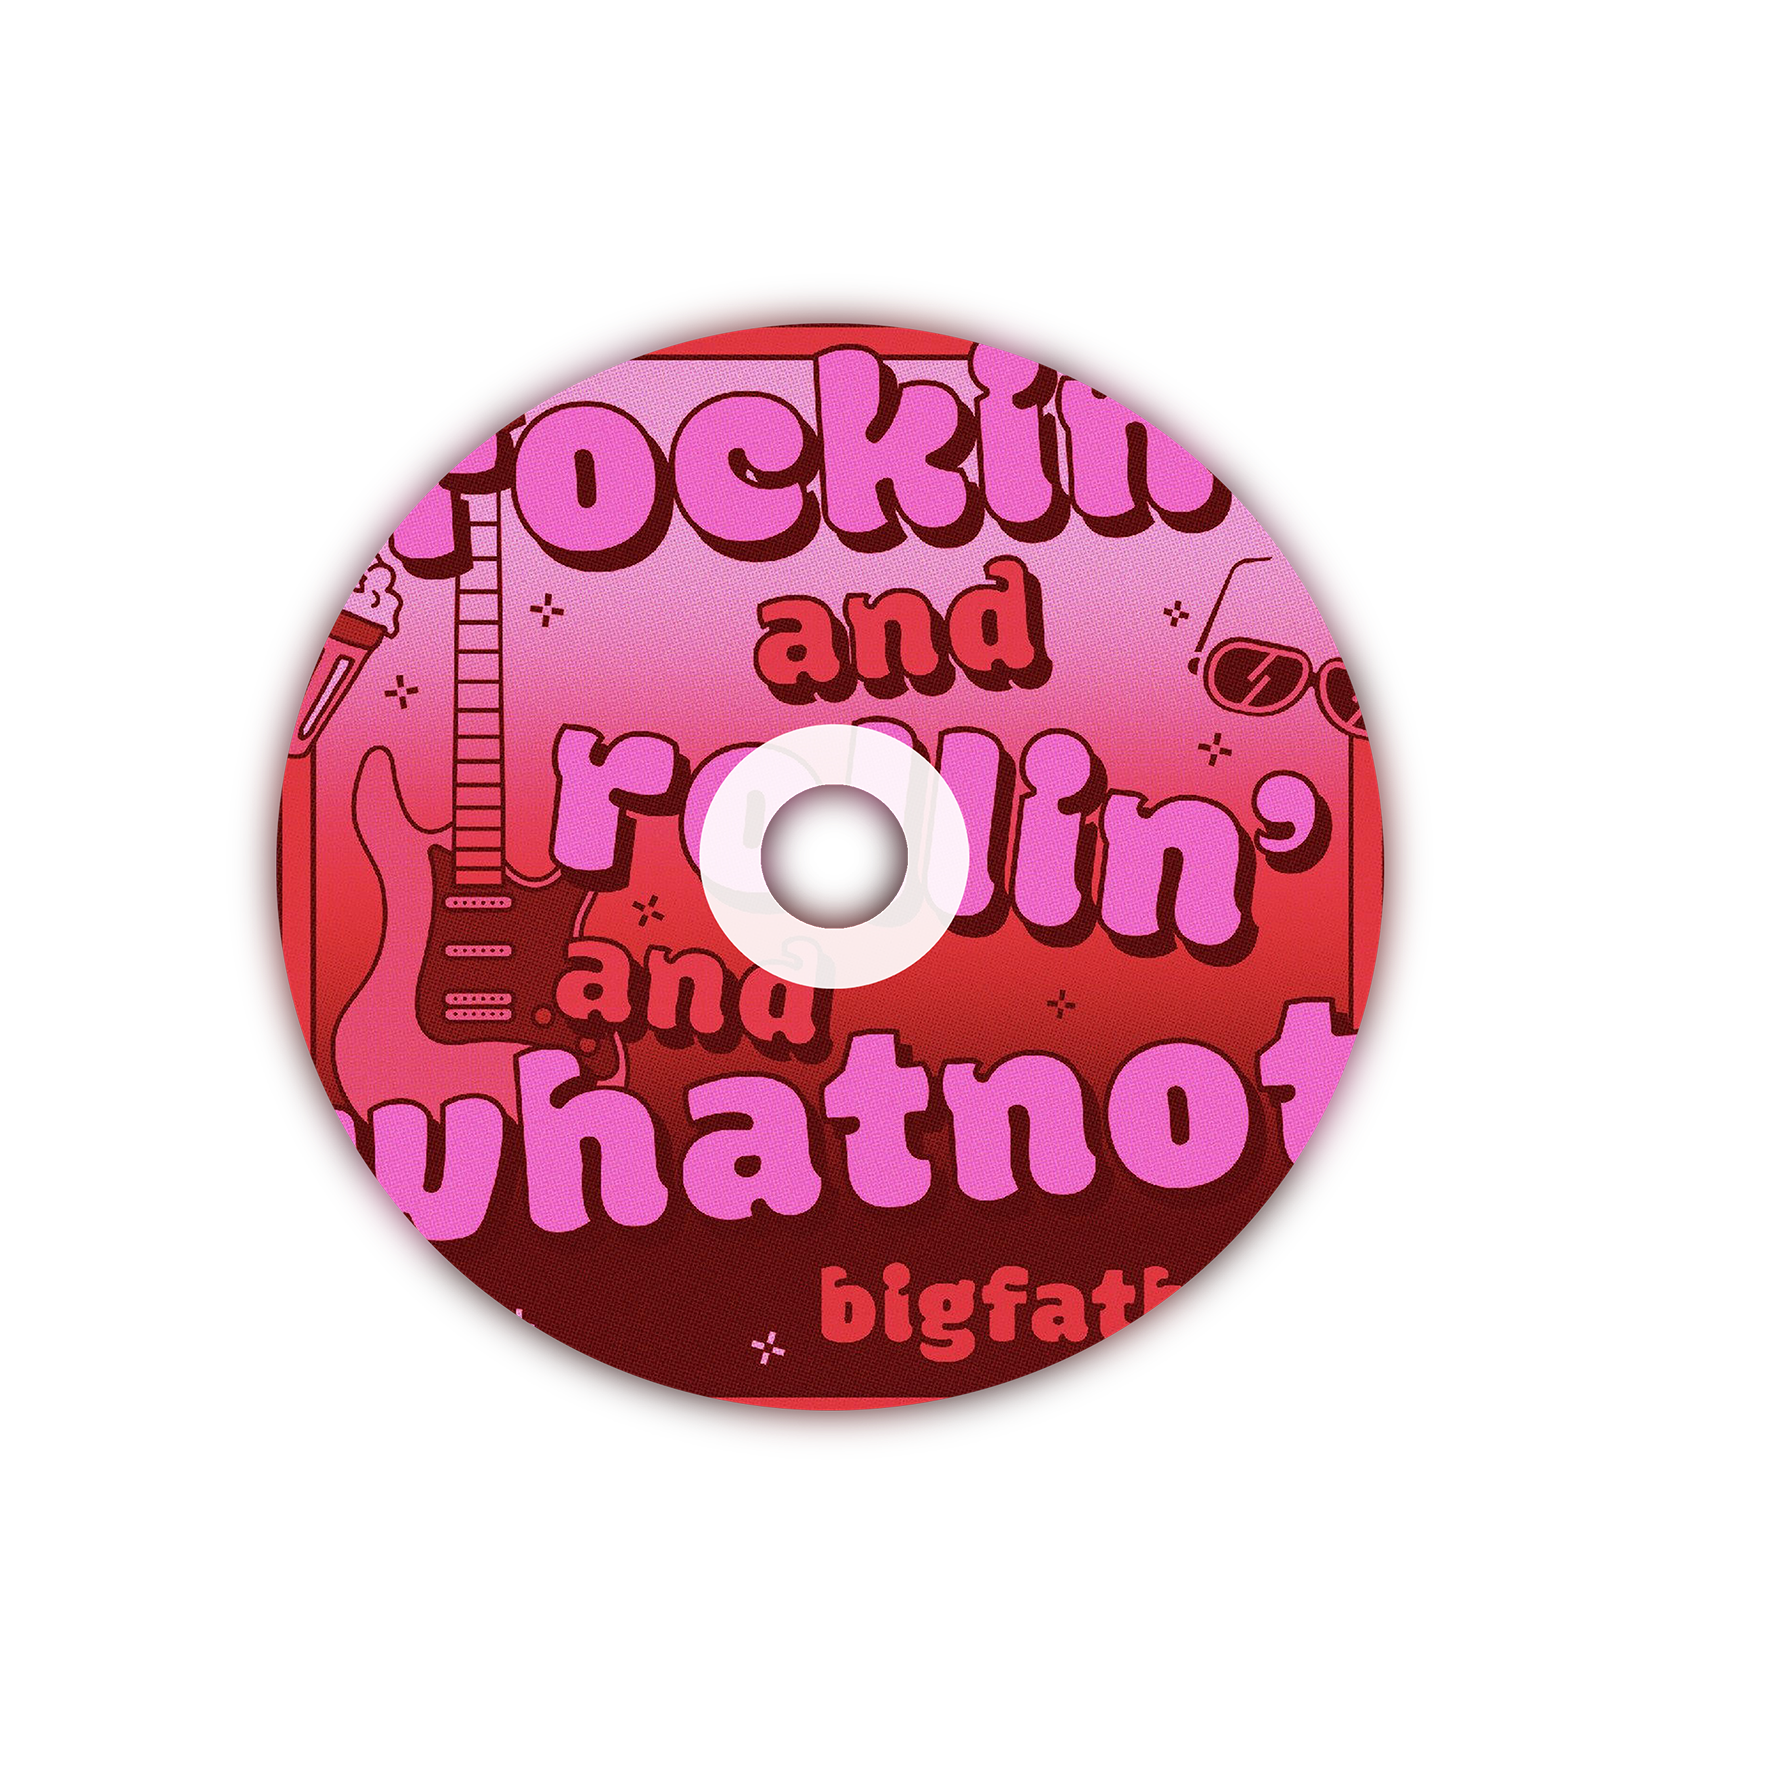 bigfatbig - Rockin' and Rollin' and Whatnot Limited Edition CD